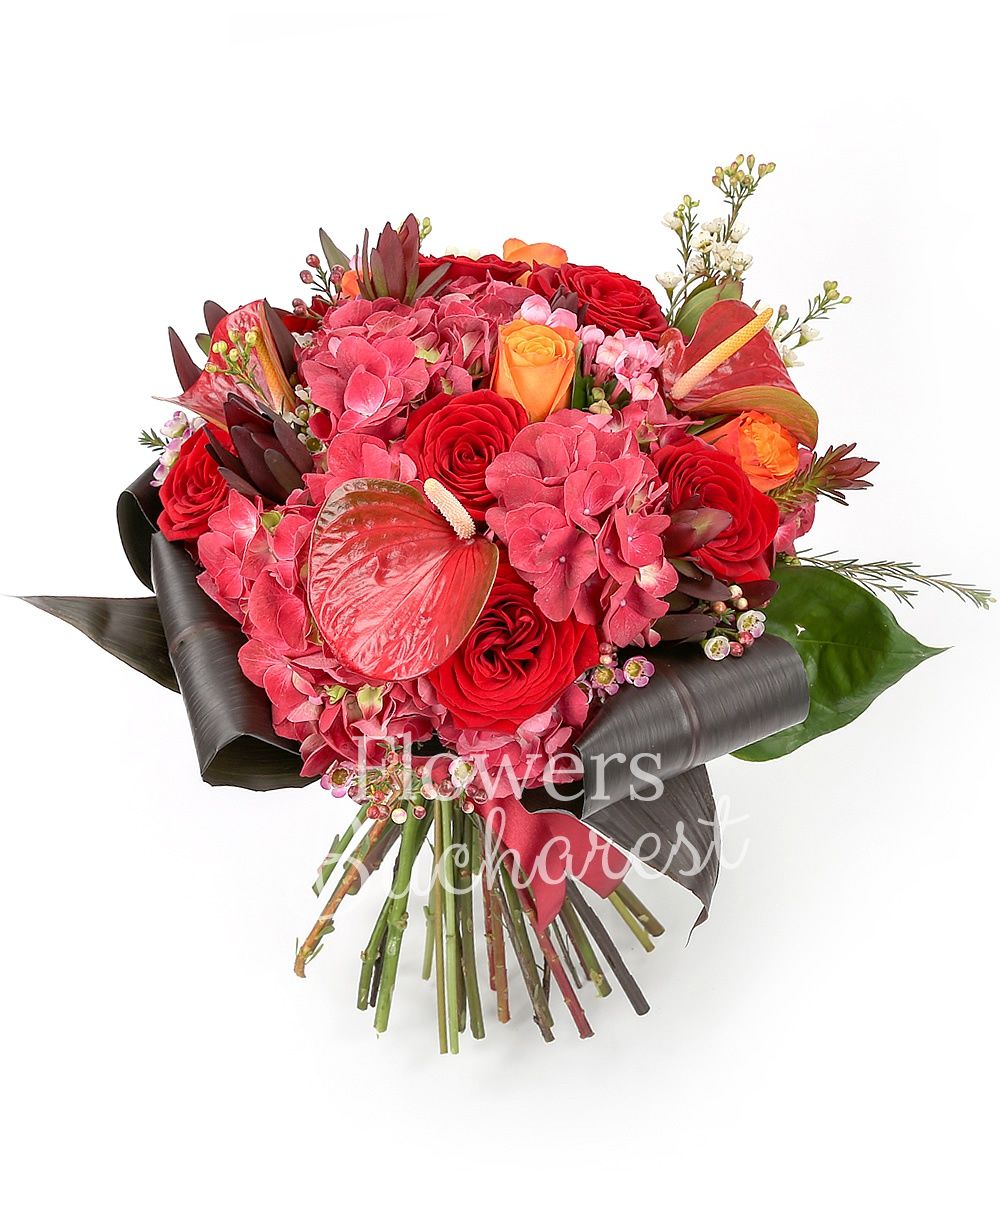 7 red roses, 5 orange roses, 3 red anthurium, 3 red hortensia, 3 pink bouvardia, 7 leucadendron, greenery